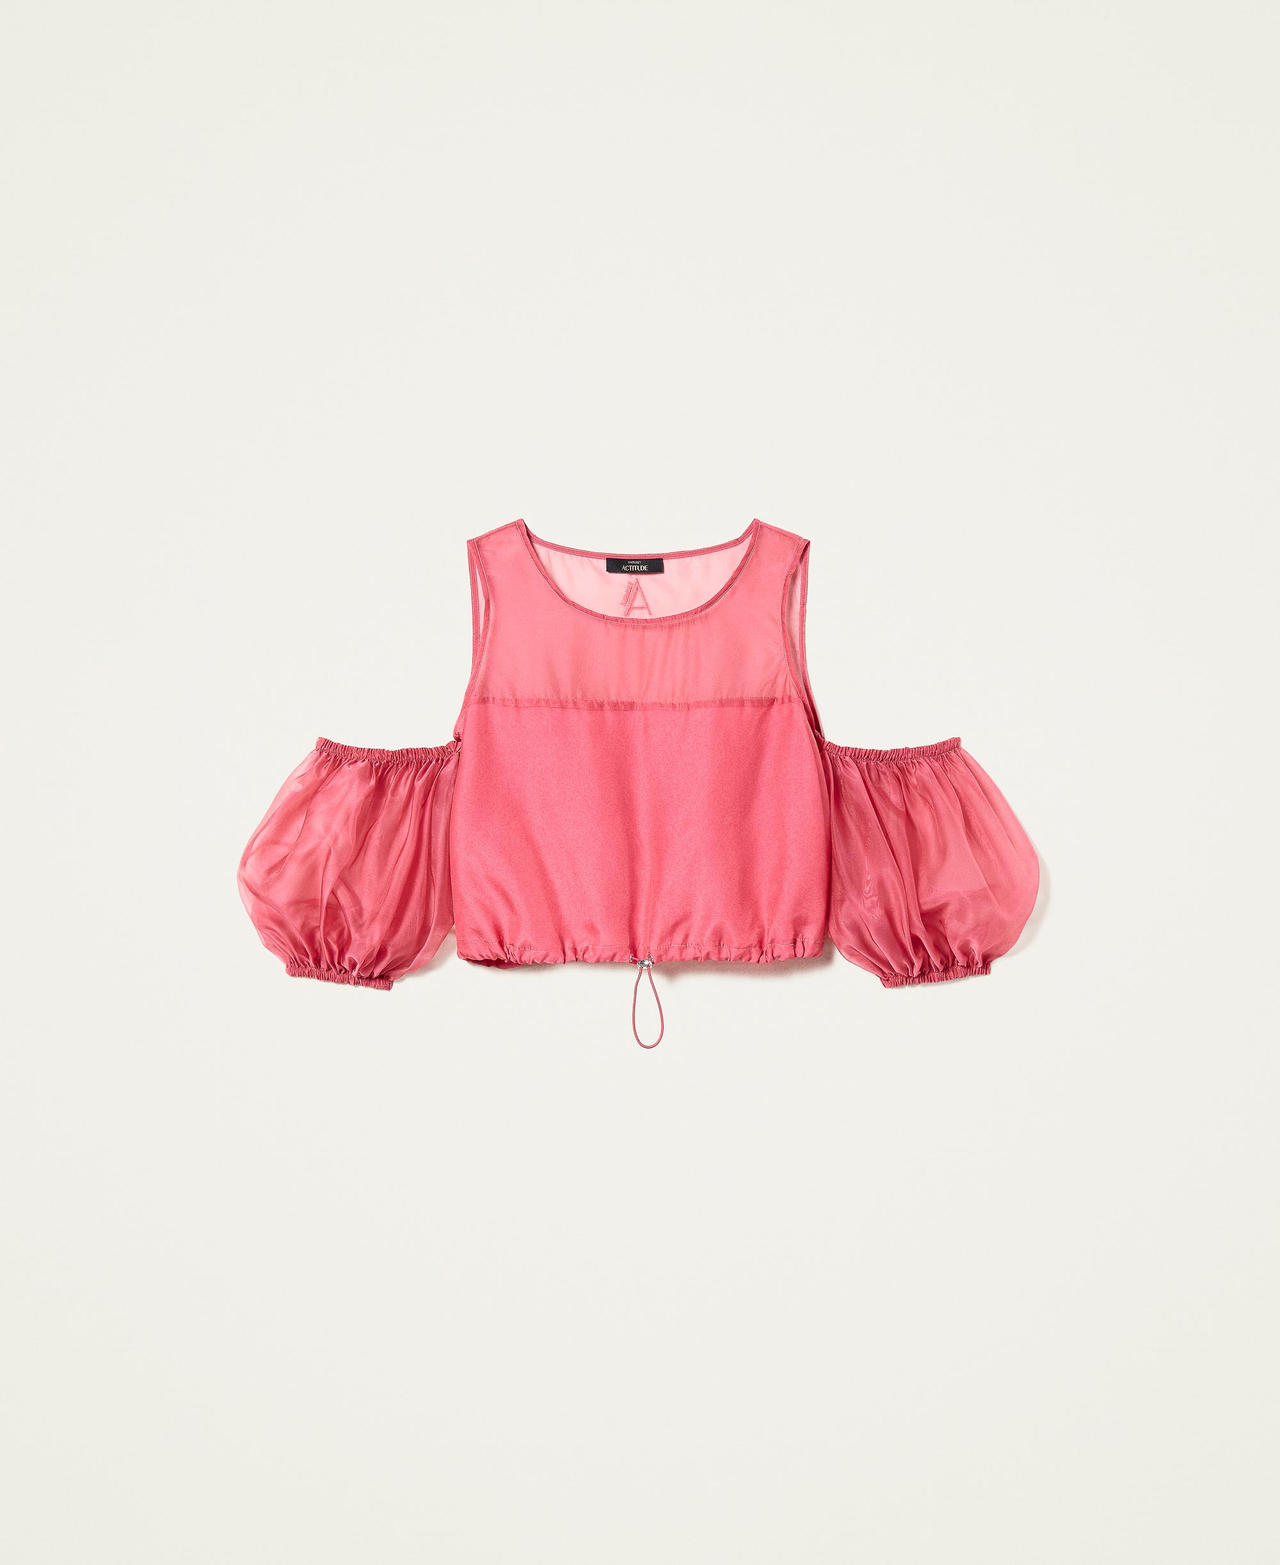 Top en organza avec manches amovibles Rose « Hot Pink » Femme 221AT2151-0S